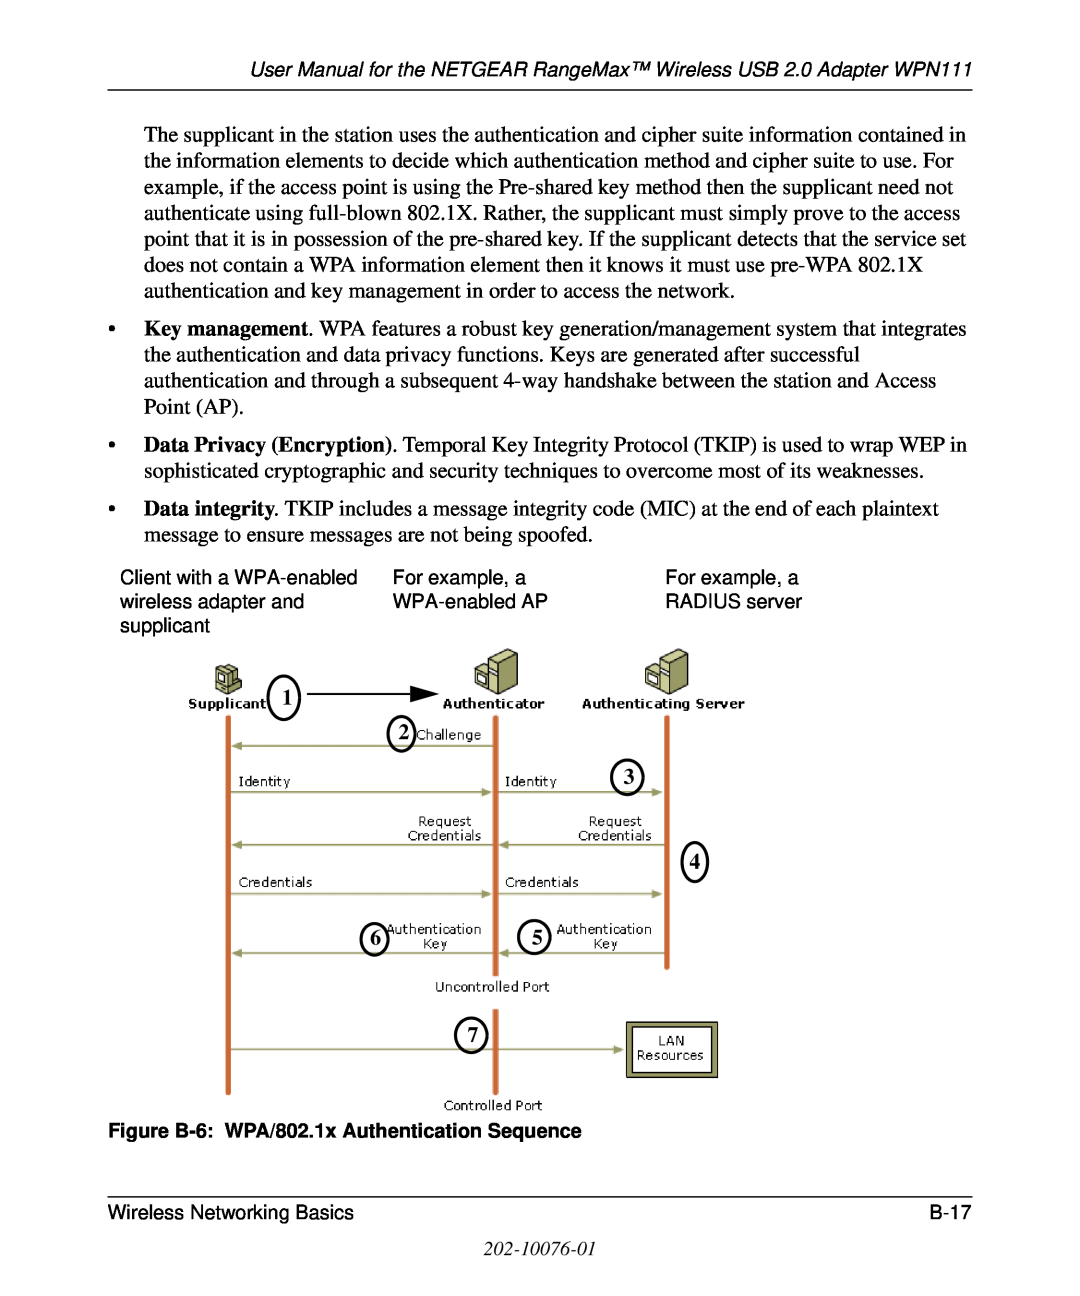 NETGEAR WPN111 user manual Figure B-6 WPA/802.1x Authentication Sequence 